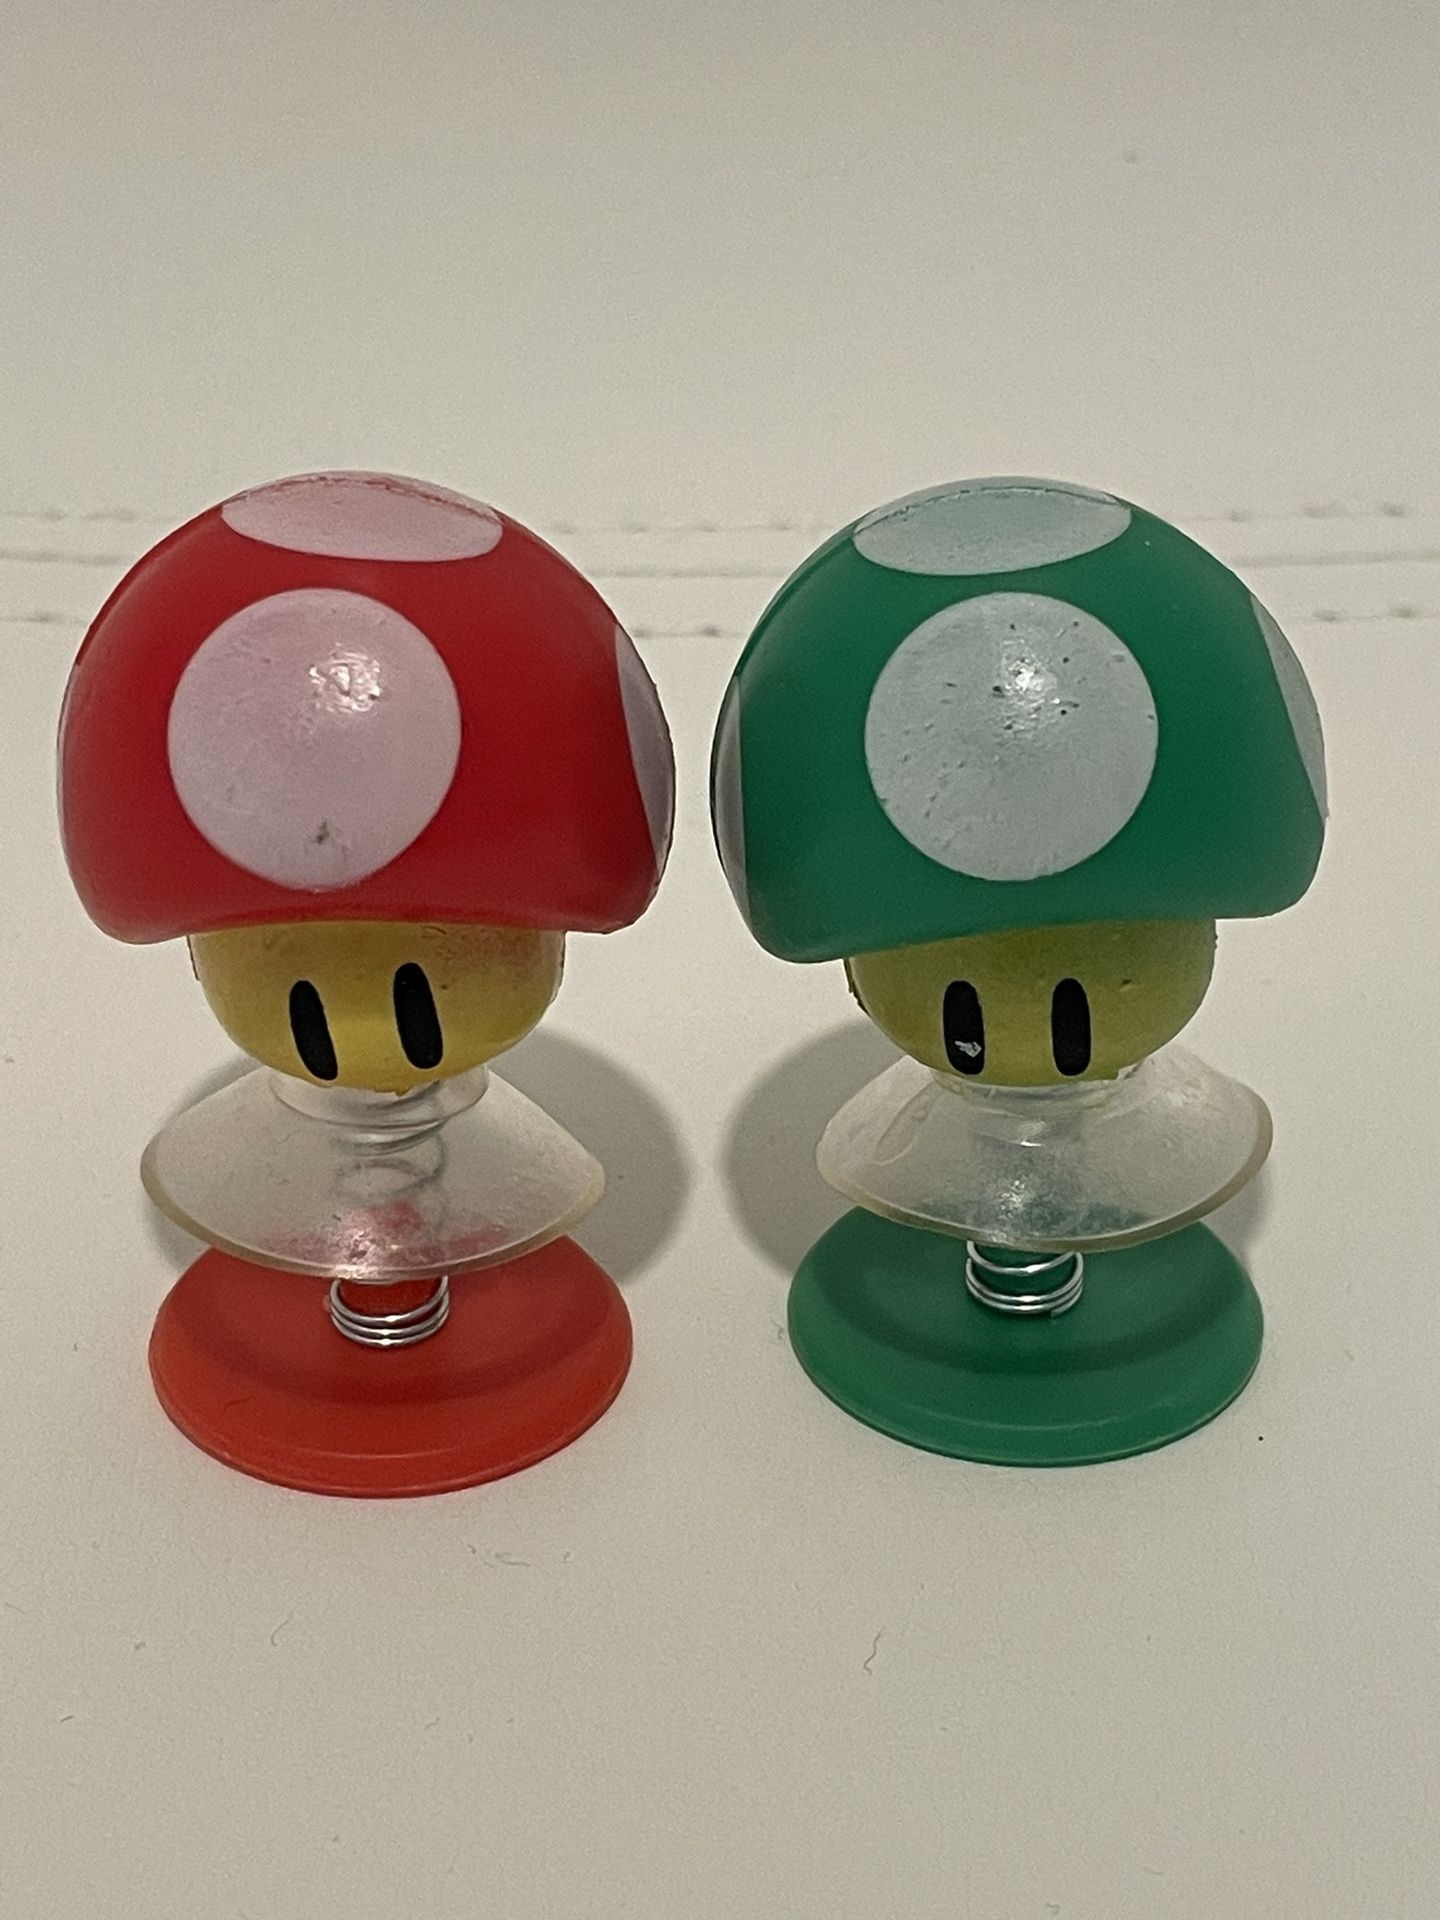 Lot of 2 DesignWare Mushrooms Popper Super Mario Bros Nintendo FREE SHIPPING 